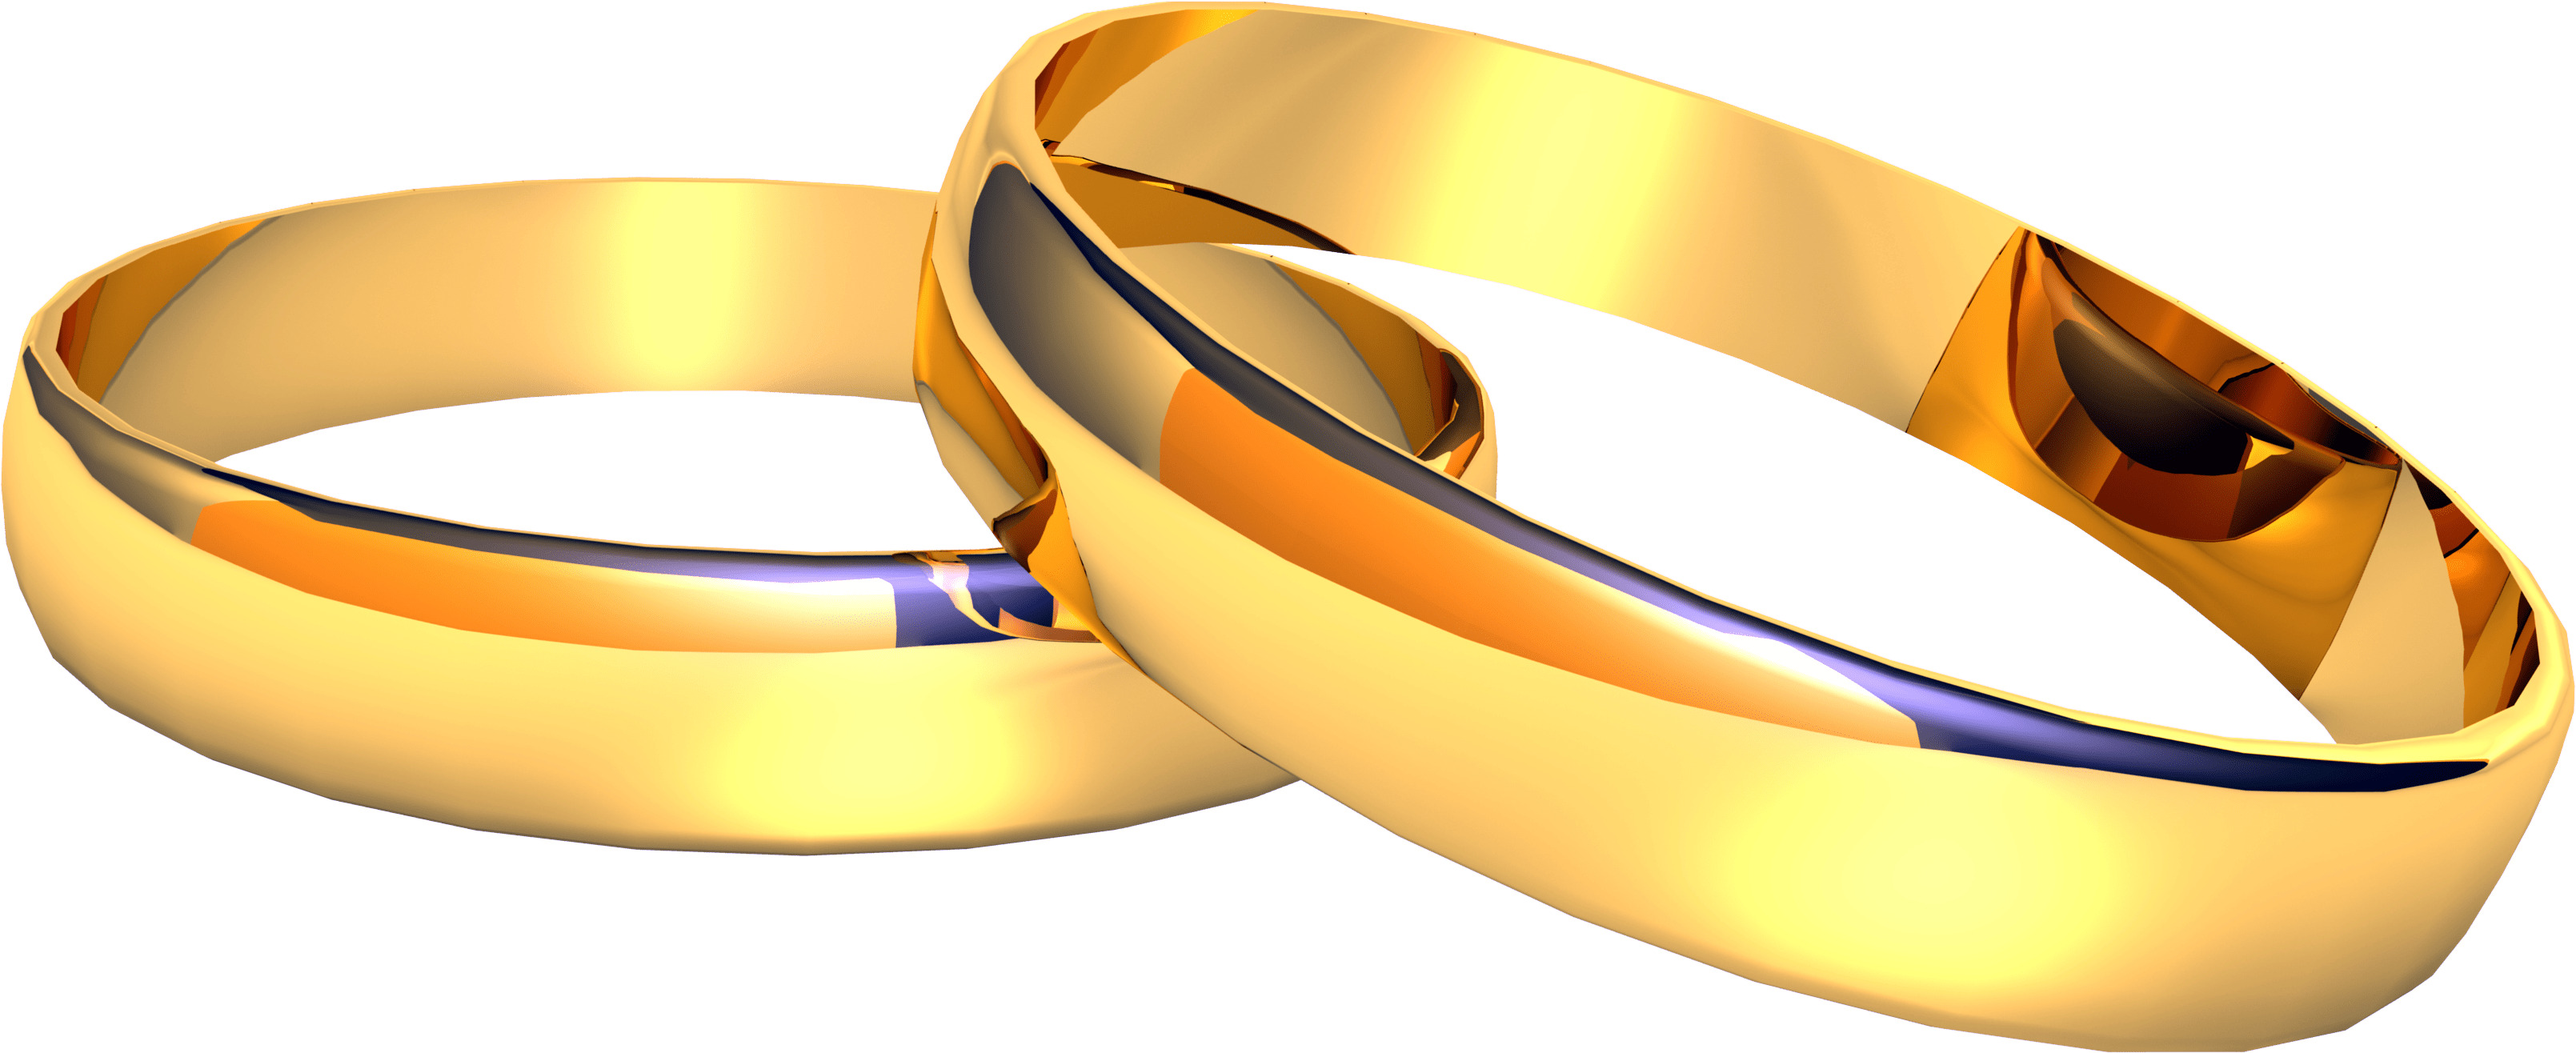 Shiny Wedding Rings icons